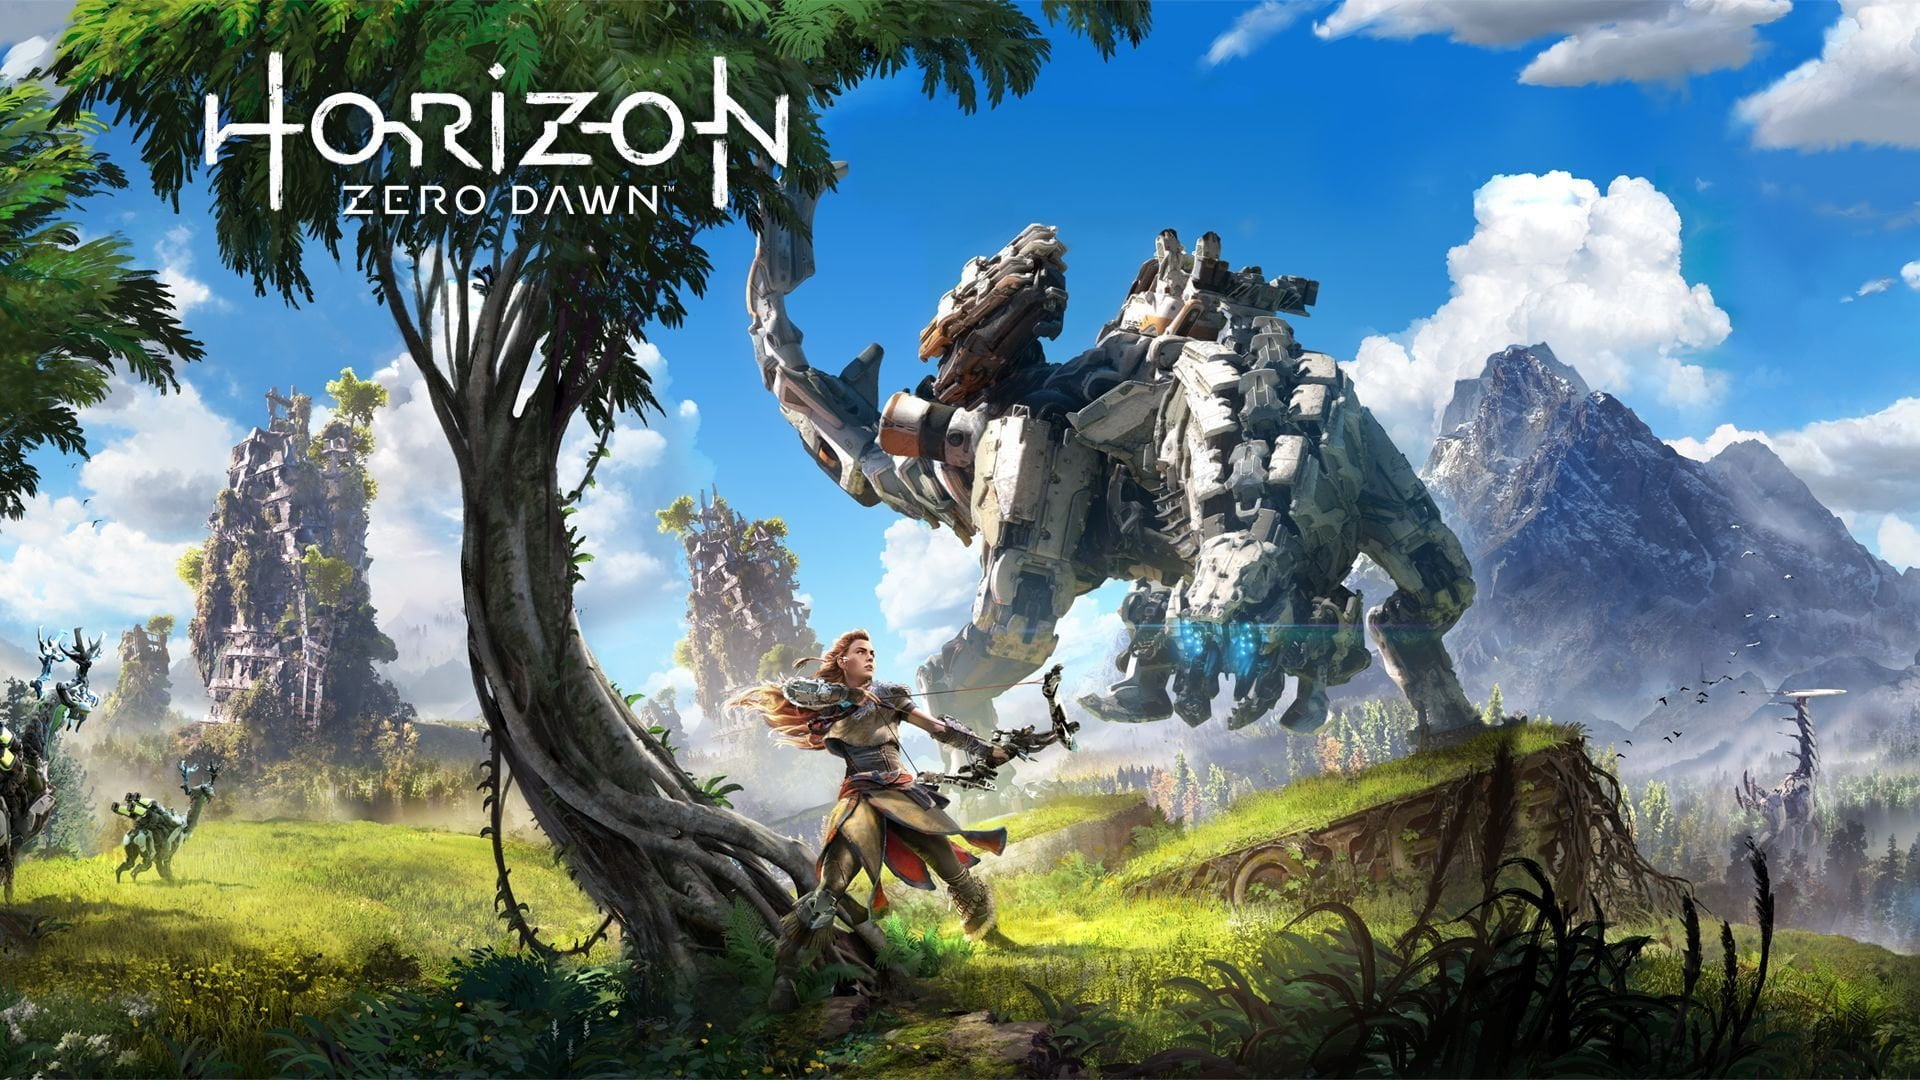 Horizon zero dawn: jogo chegará ao pc | thumb 1920 718467 | guerrilla games, horizon zero dawn, pc, playstation 4 | horizon zero dawn notícias